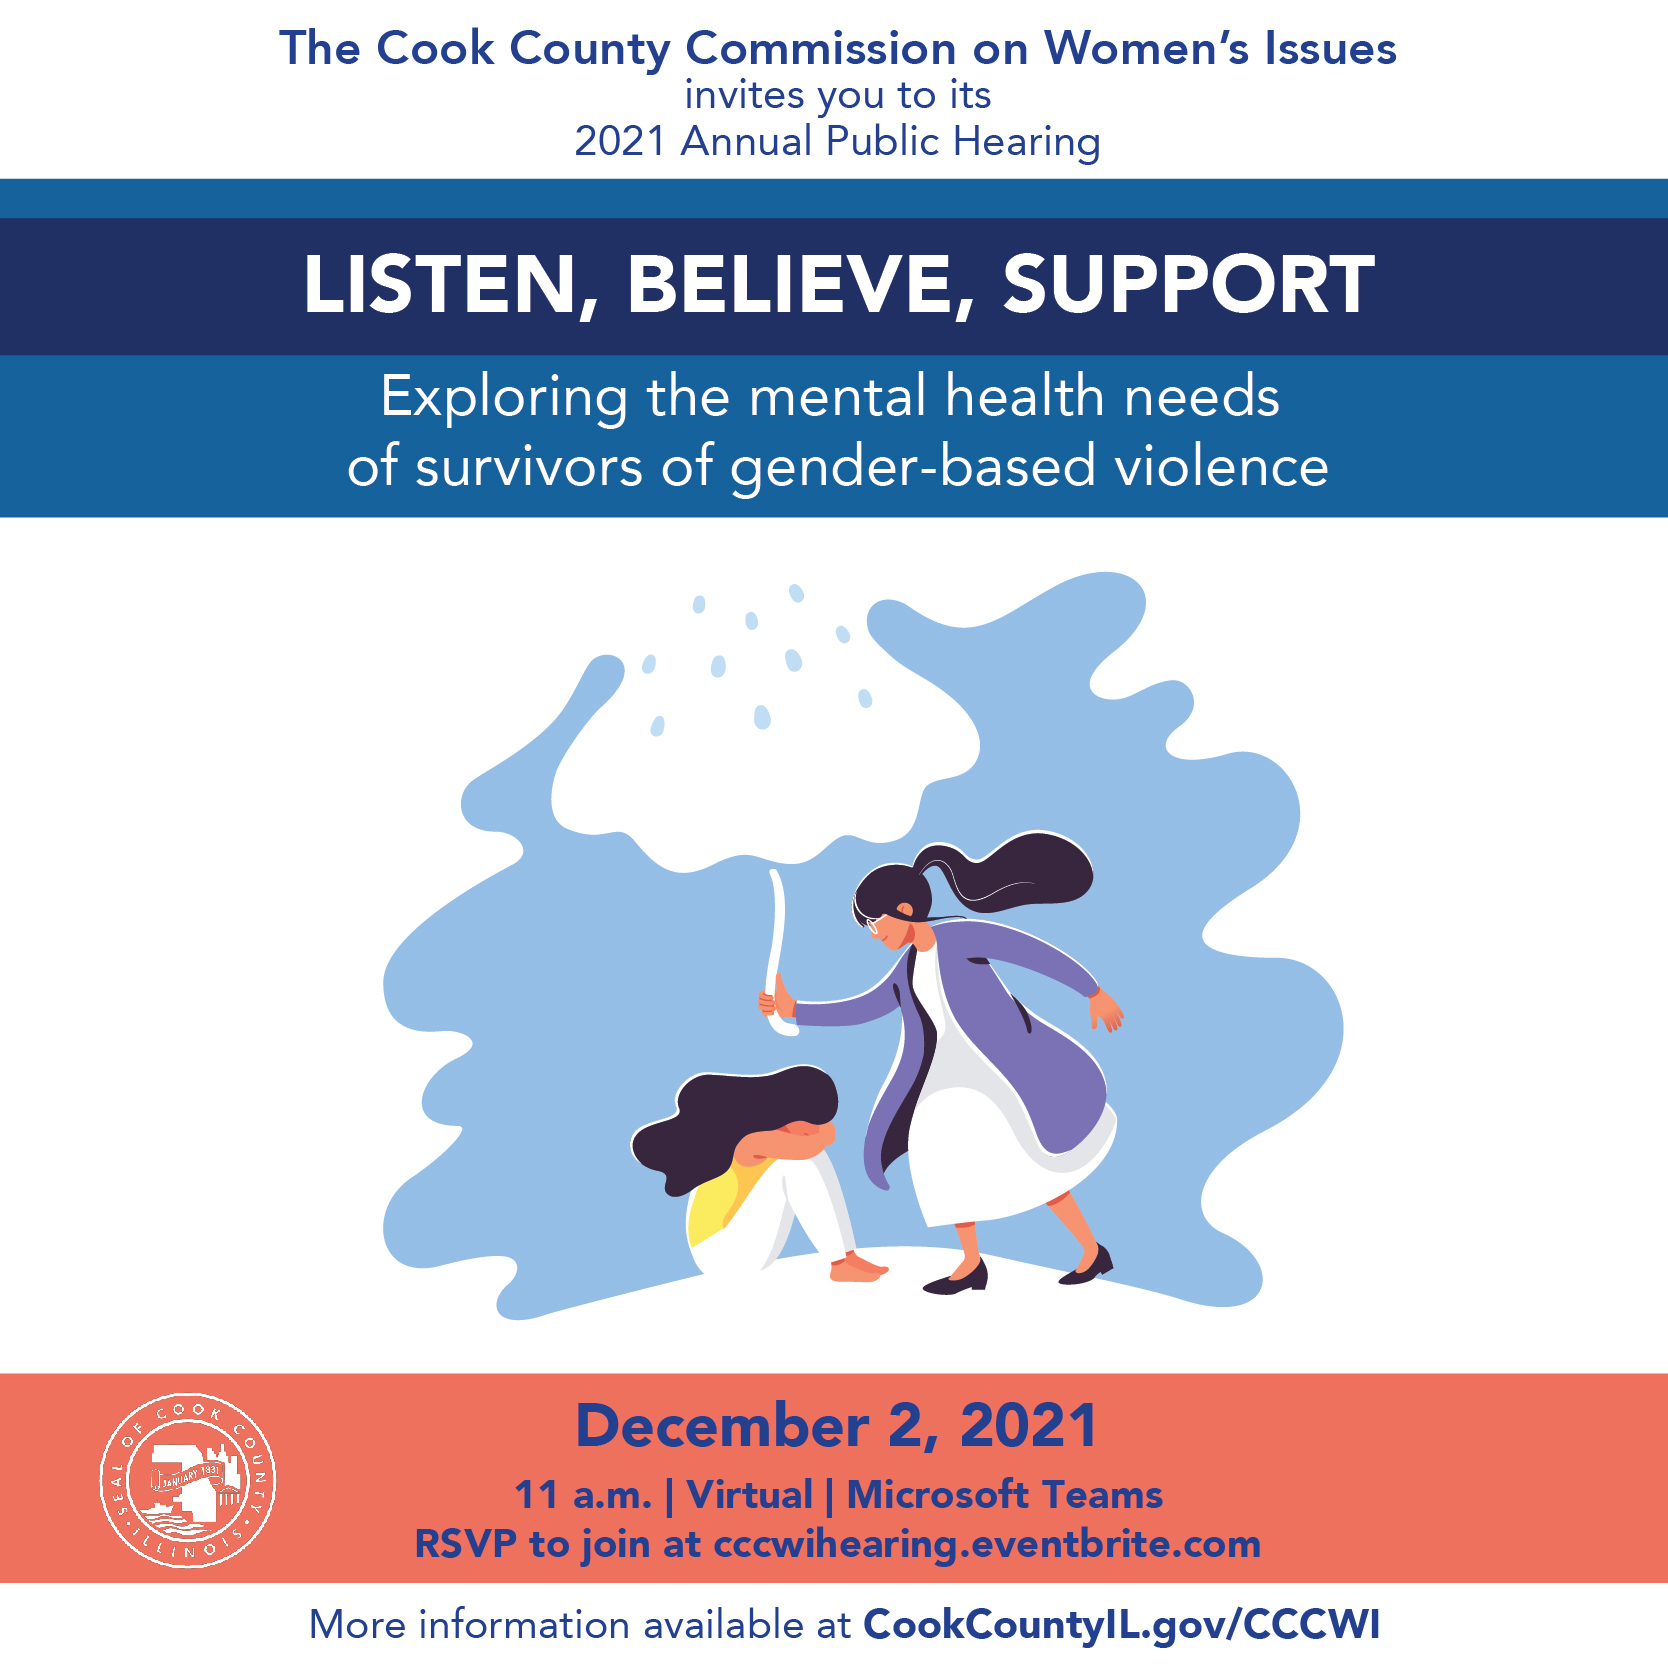 Listen, Believe, Support: Exploring the mental health needs of survivors of gender-based violence